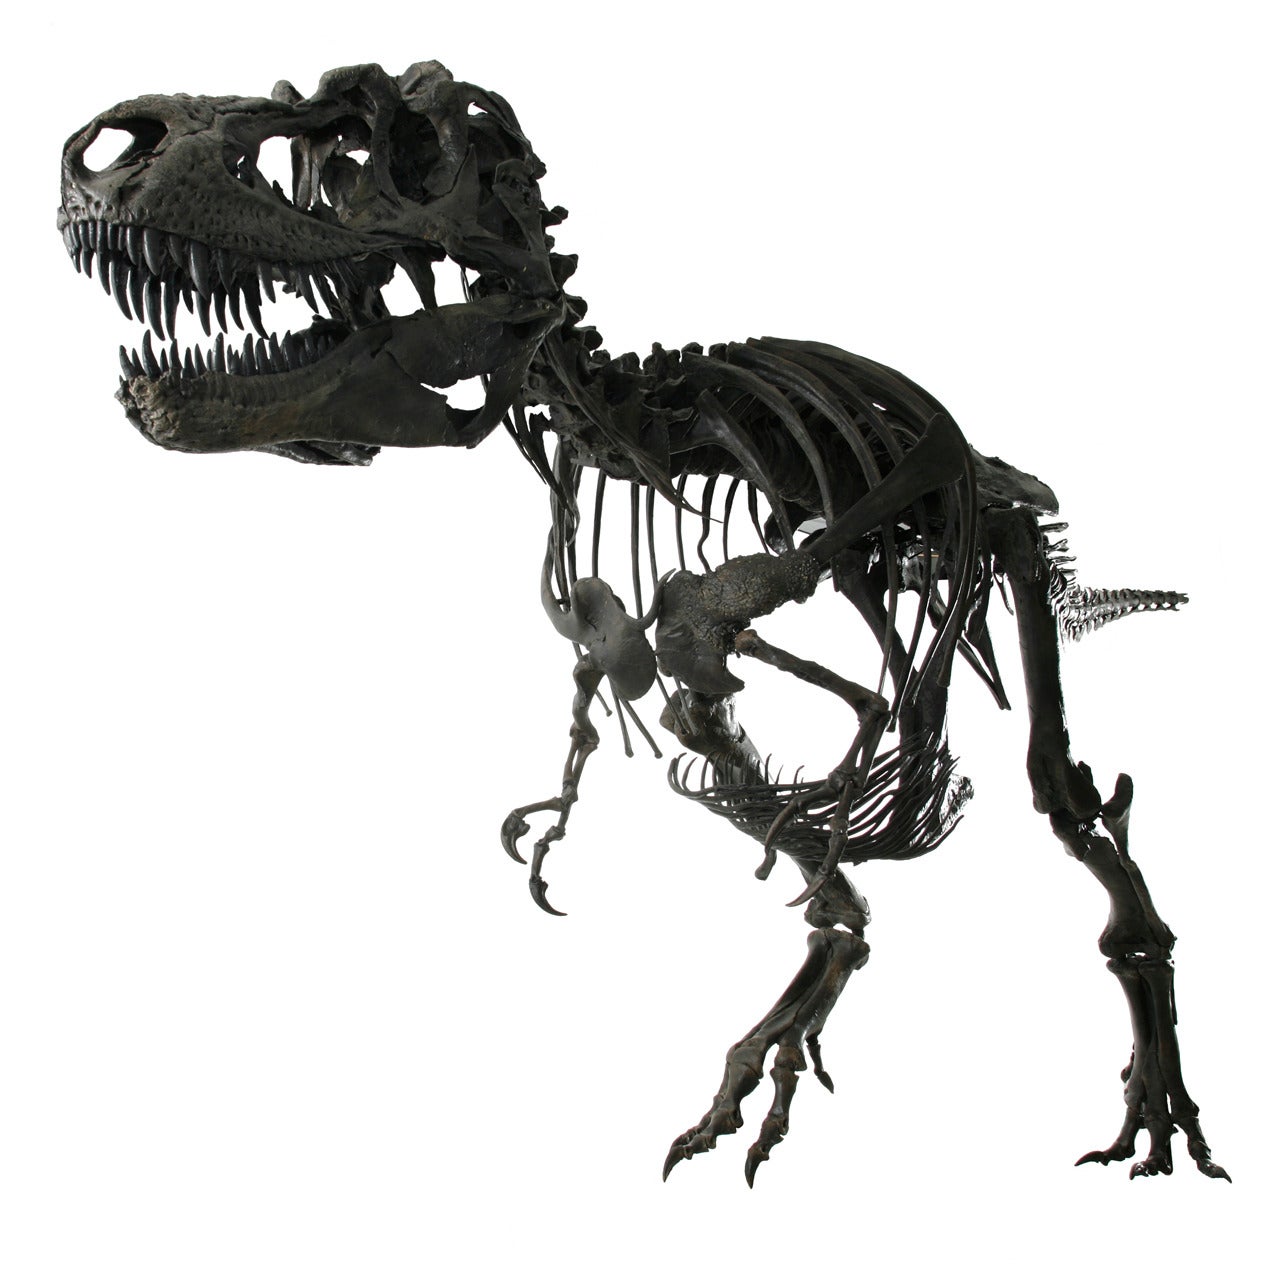 Complete Life-Size Dinosaur (Gorgosaurus) Skeleton Cast